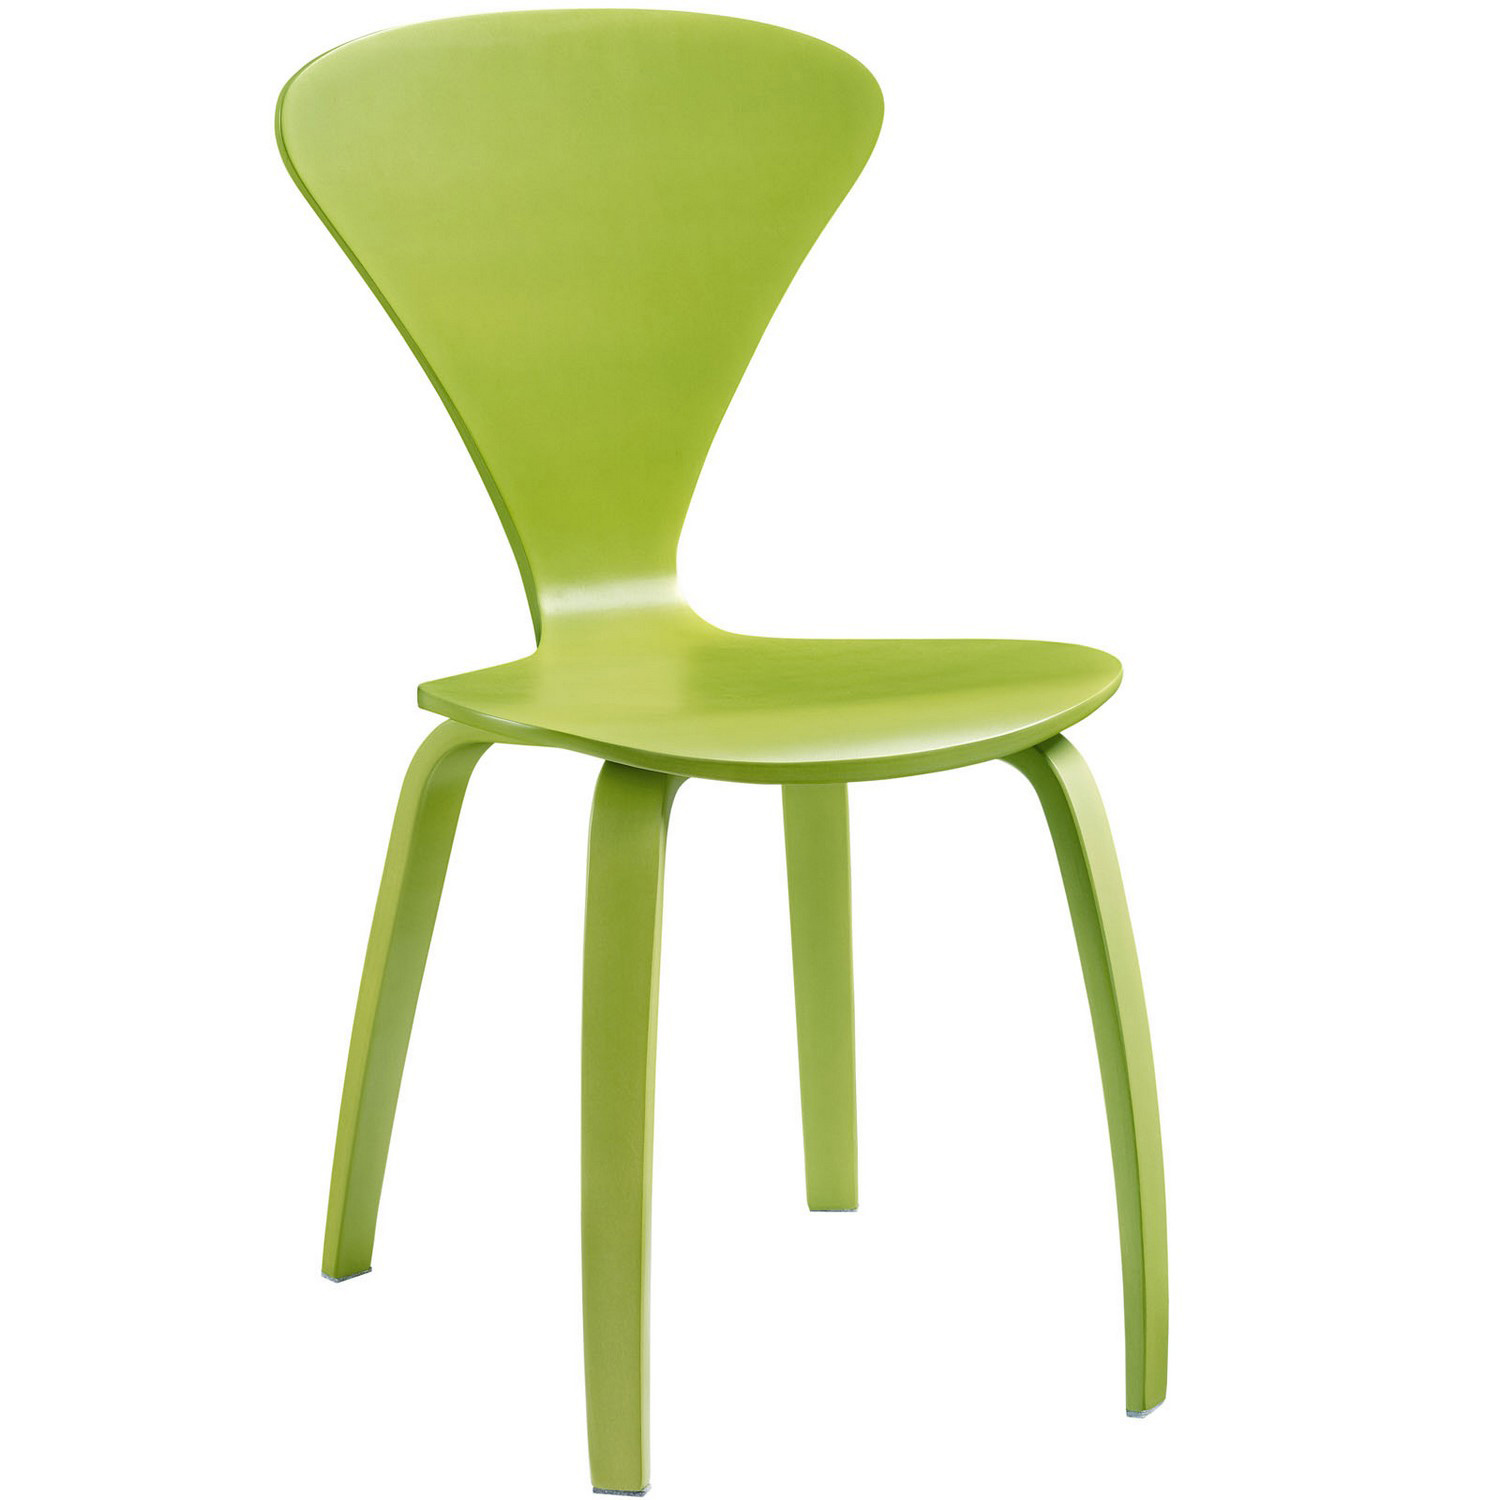 Modway Vortex Dining Side Chair - Green